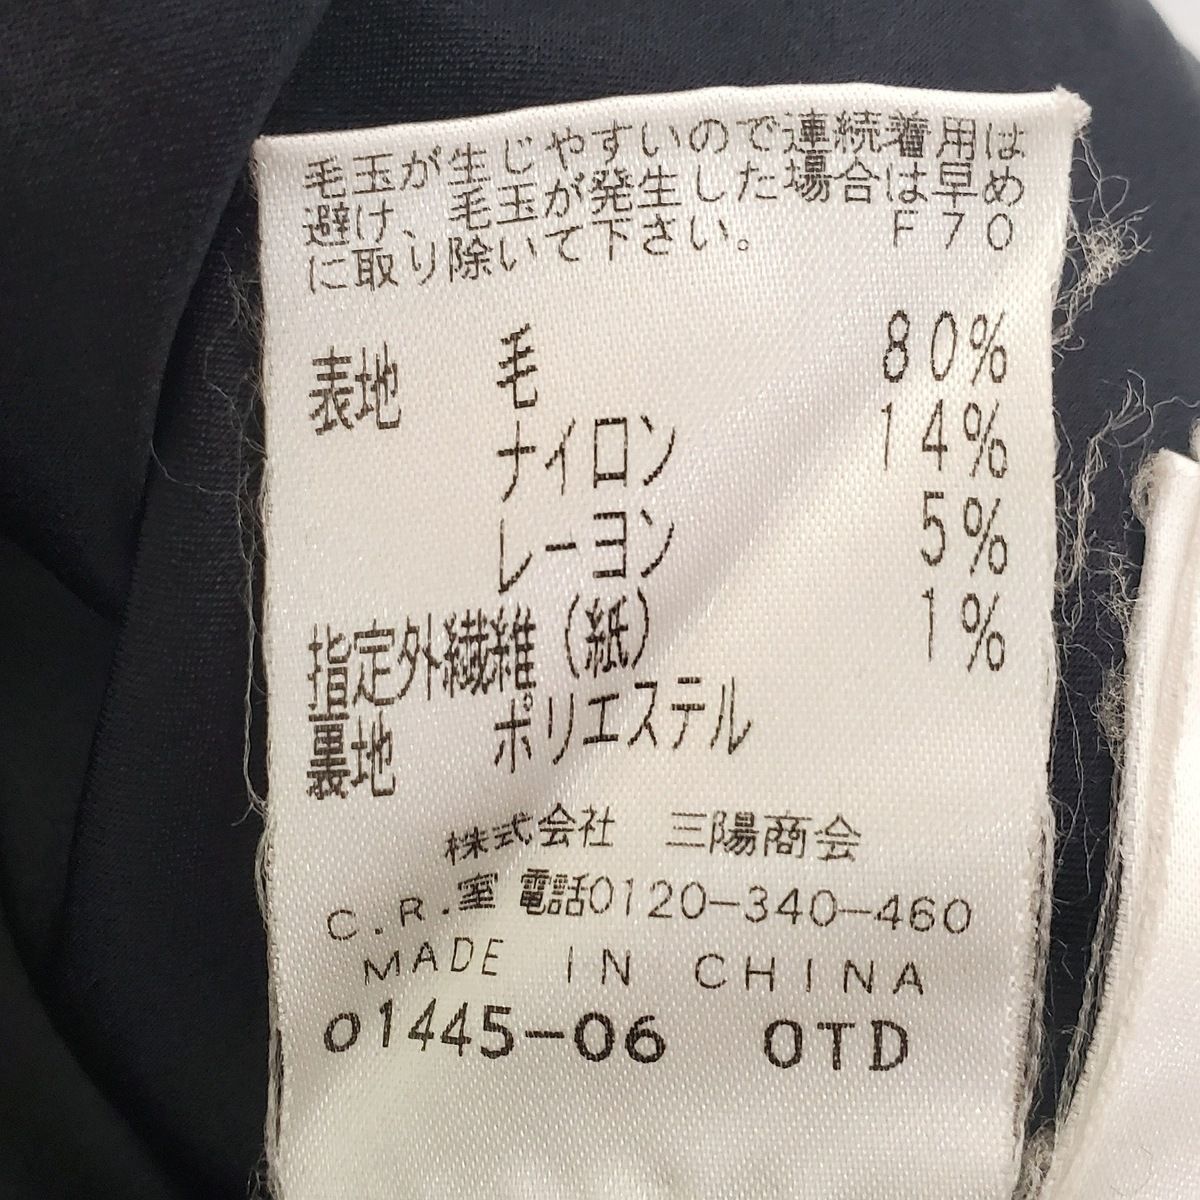 EPOCA(エポカ) コート サイズ40 M レディース美品 - 黒×ゴールド 長袖